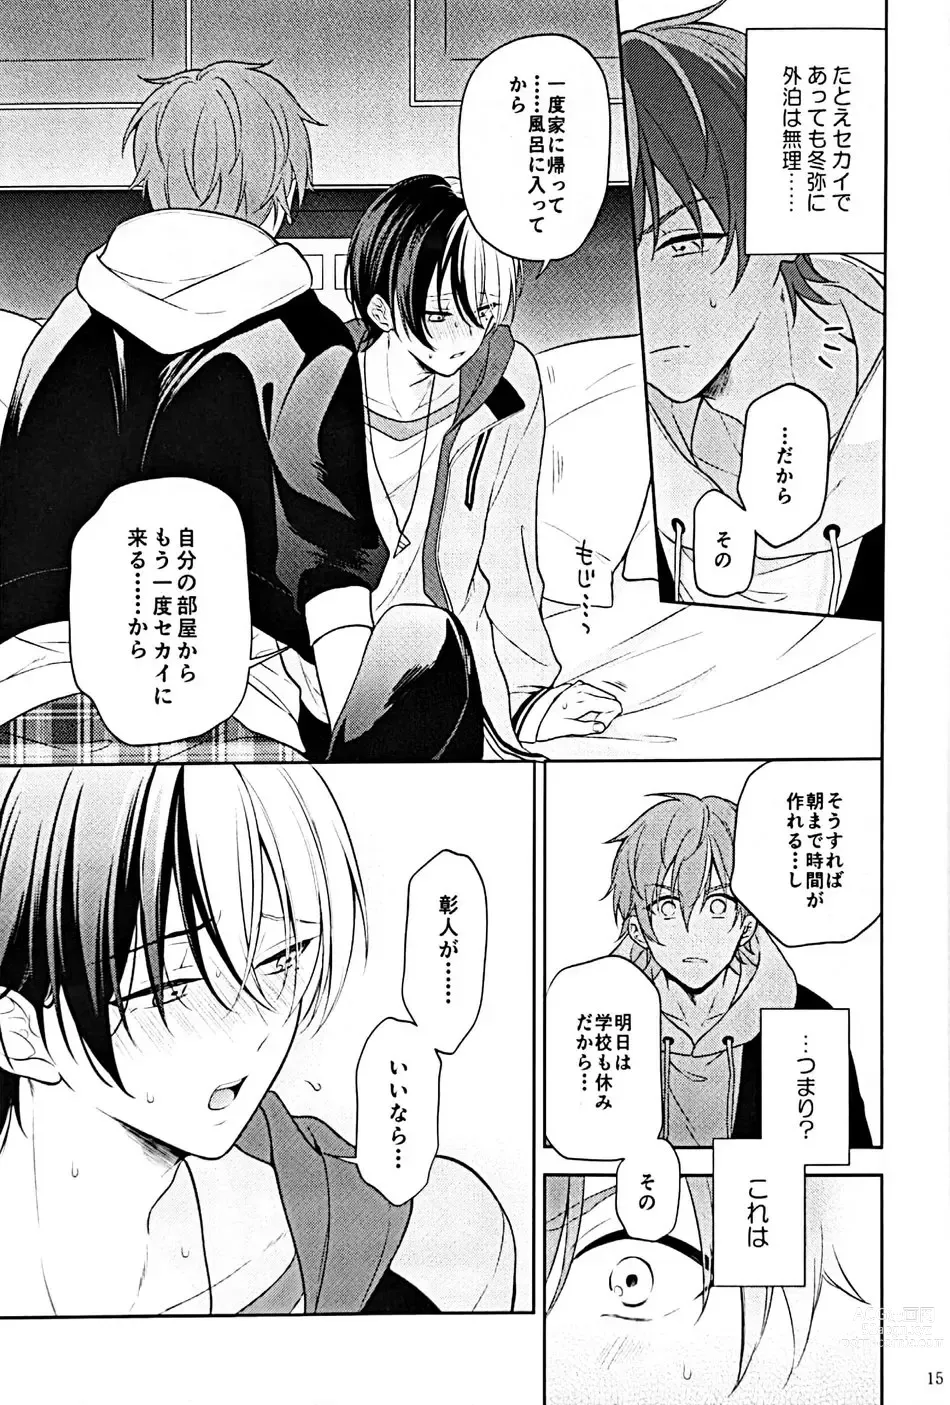 Page 16 of doujinshi RETRY